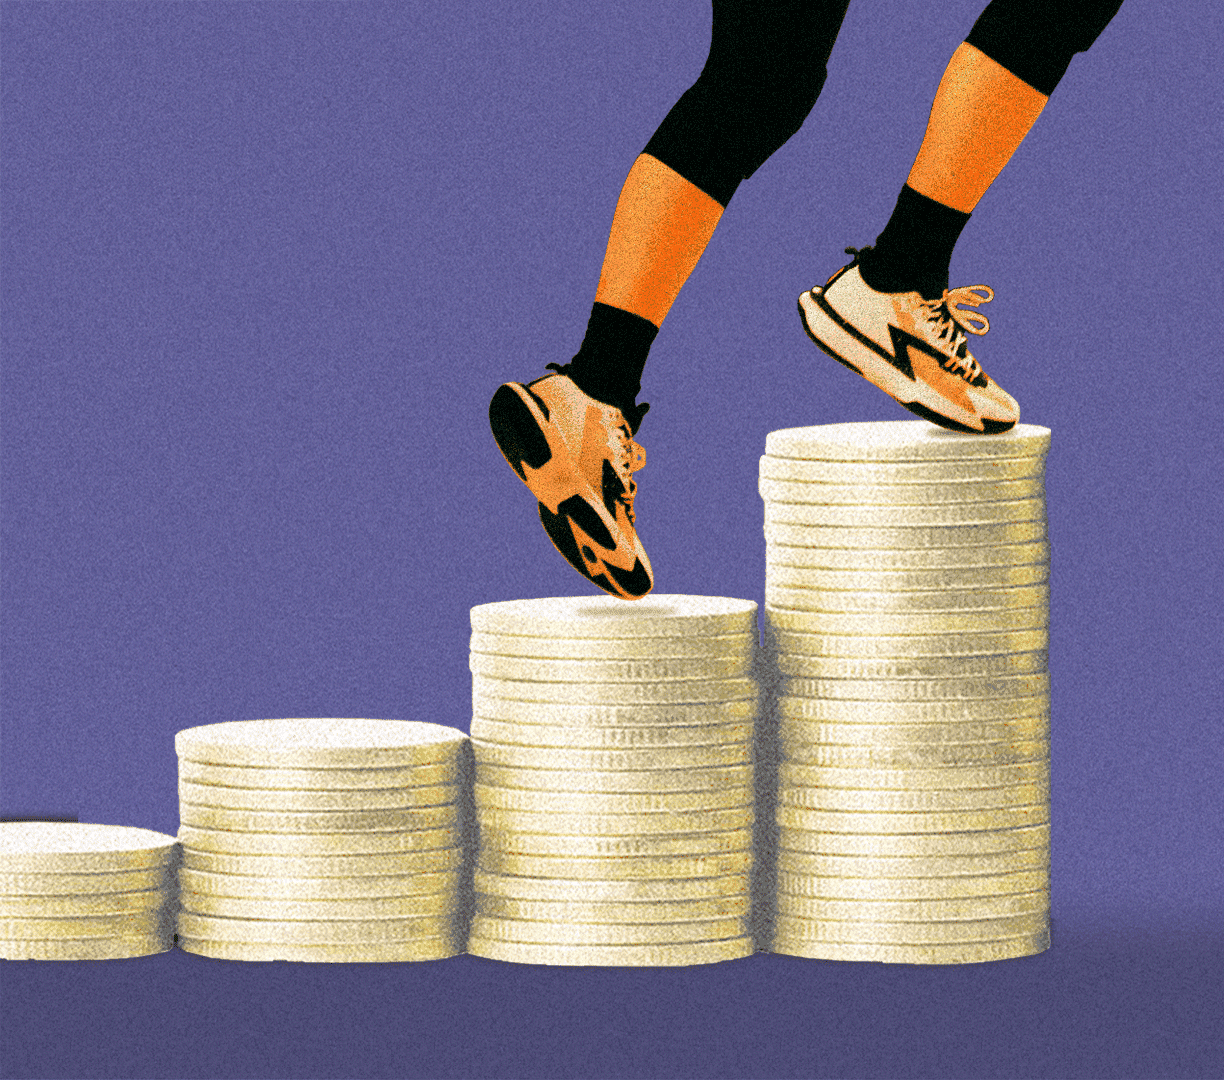 Football player climbs coin stacks illustration